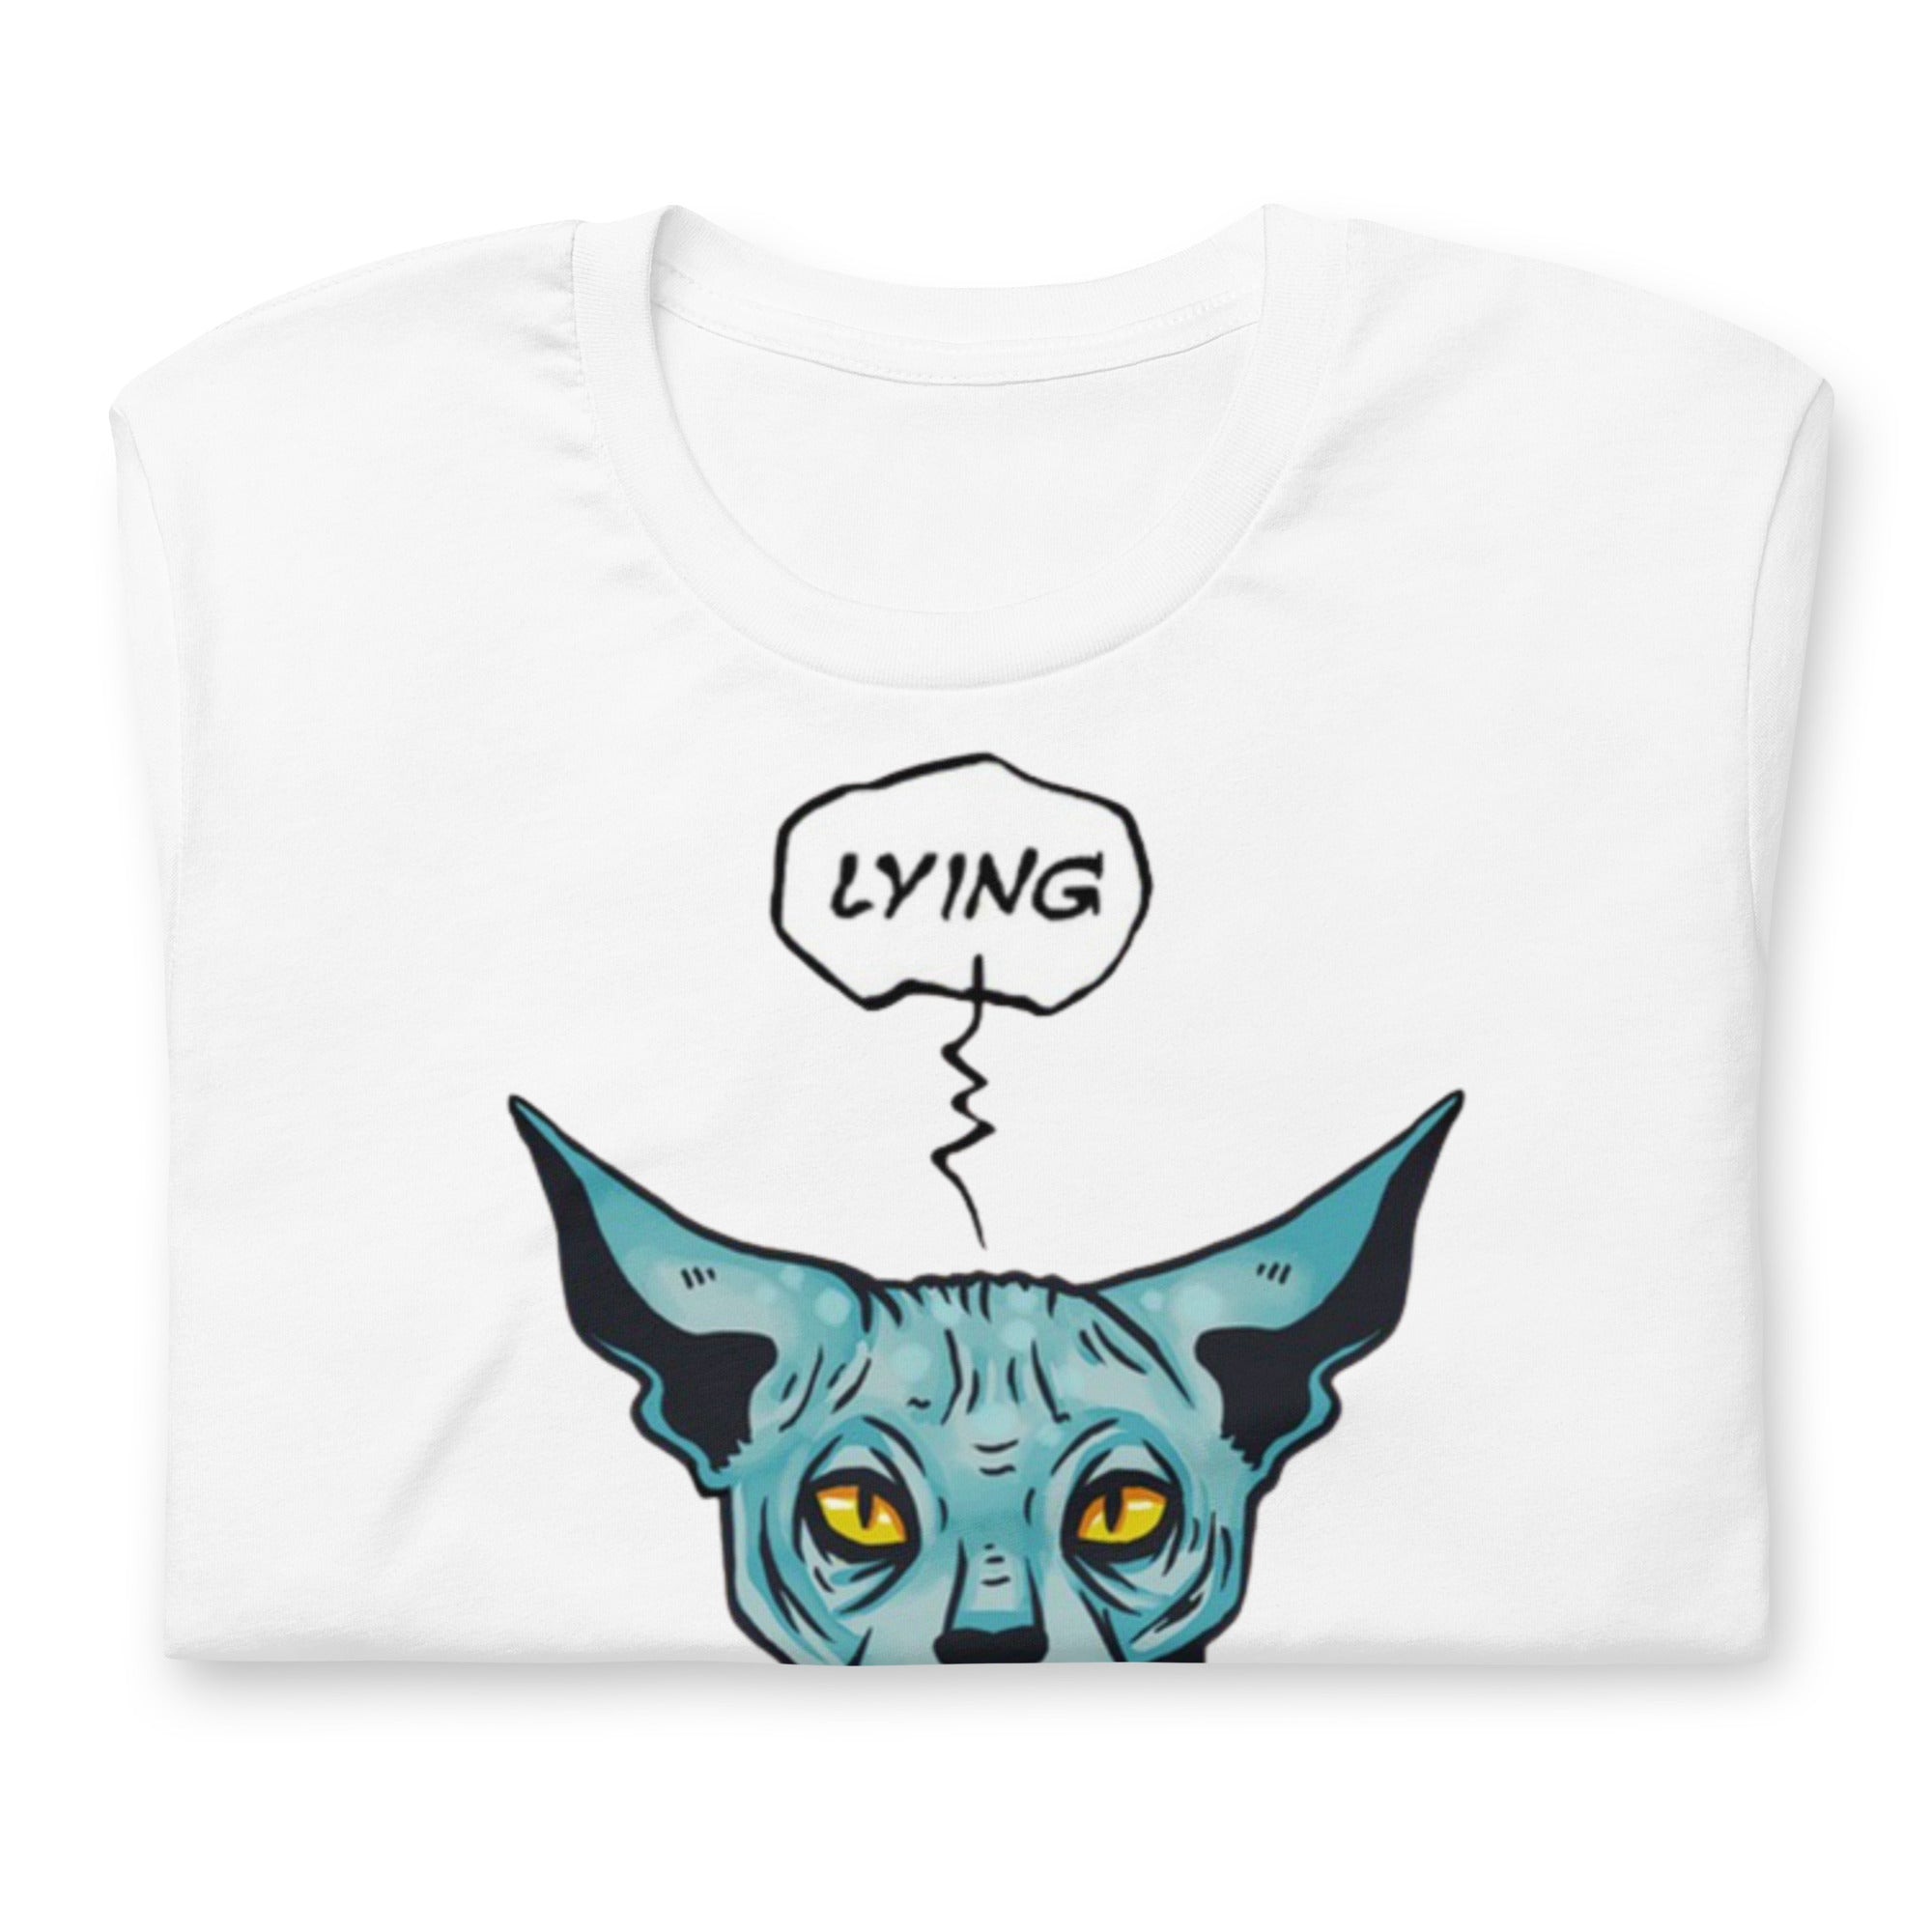 Lying cat shirt